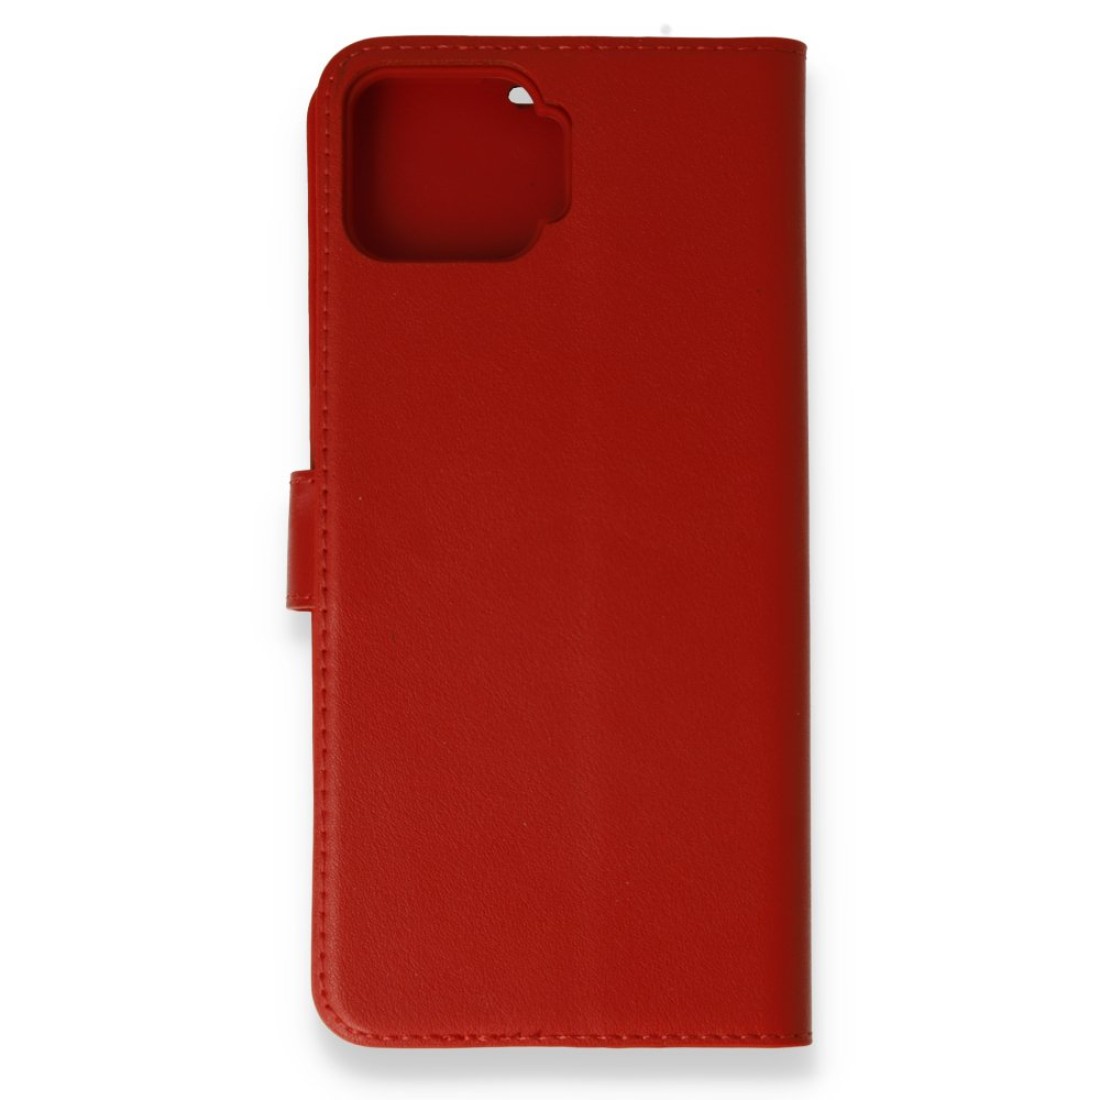 Oppo A73 Kılıf Trend S Plus Kapaklı Kılıf - Kırmızı